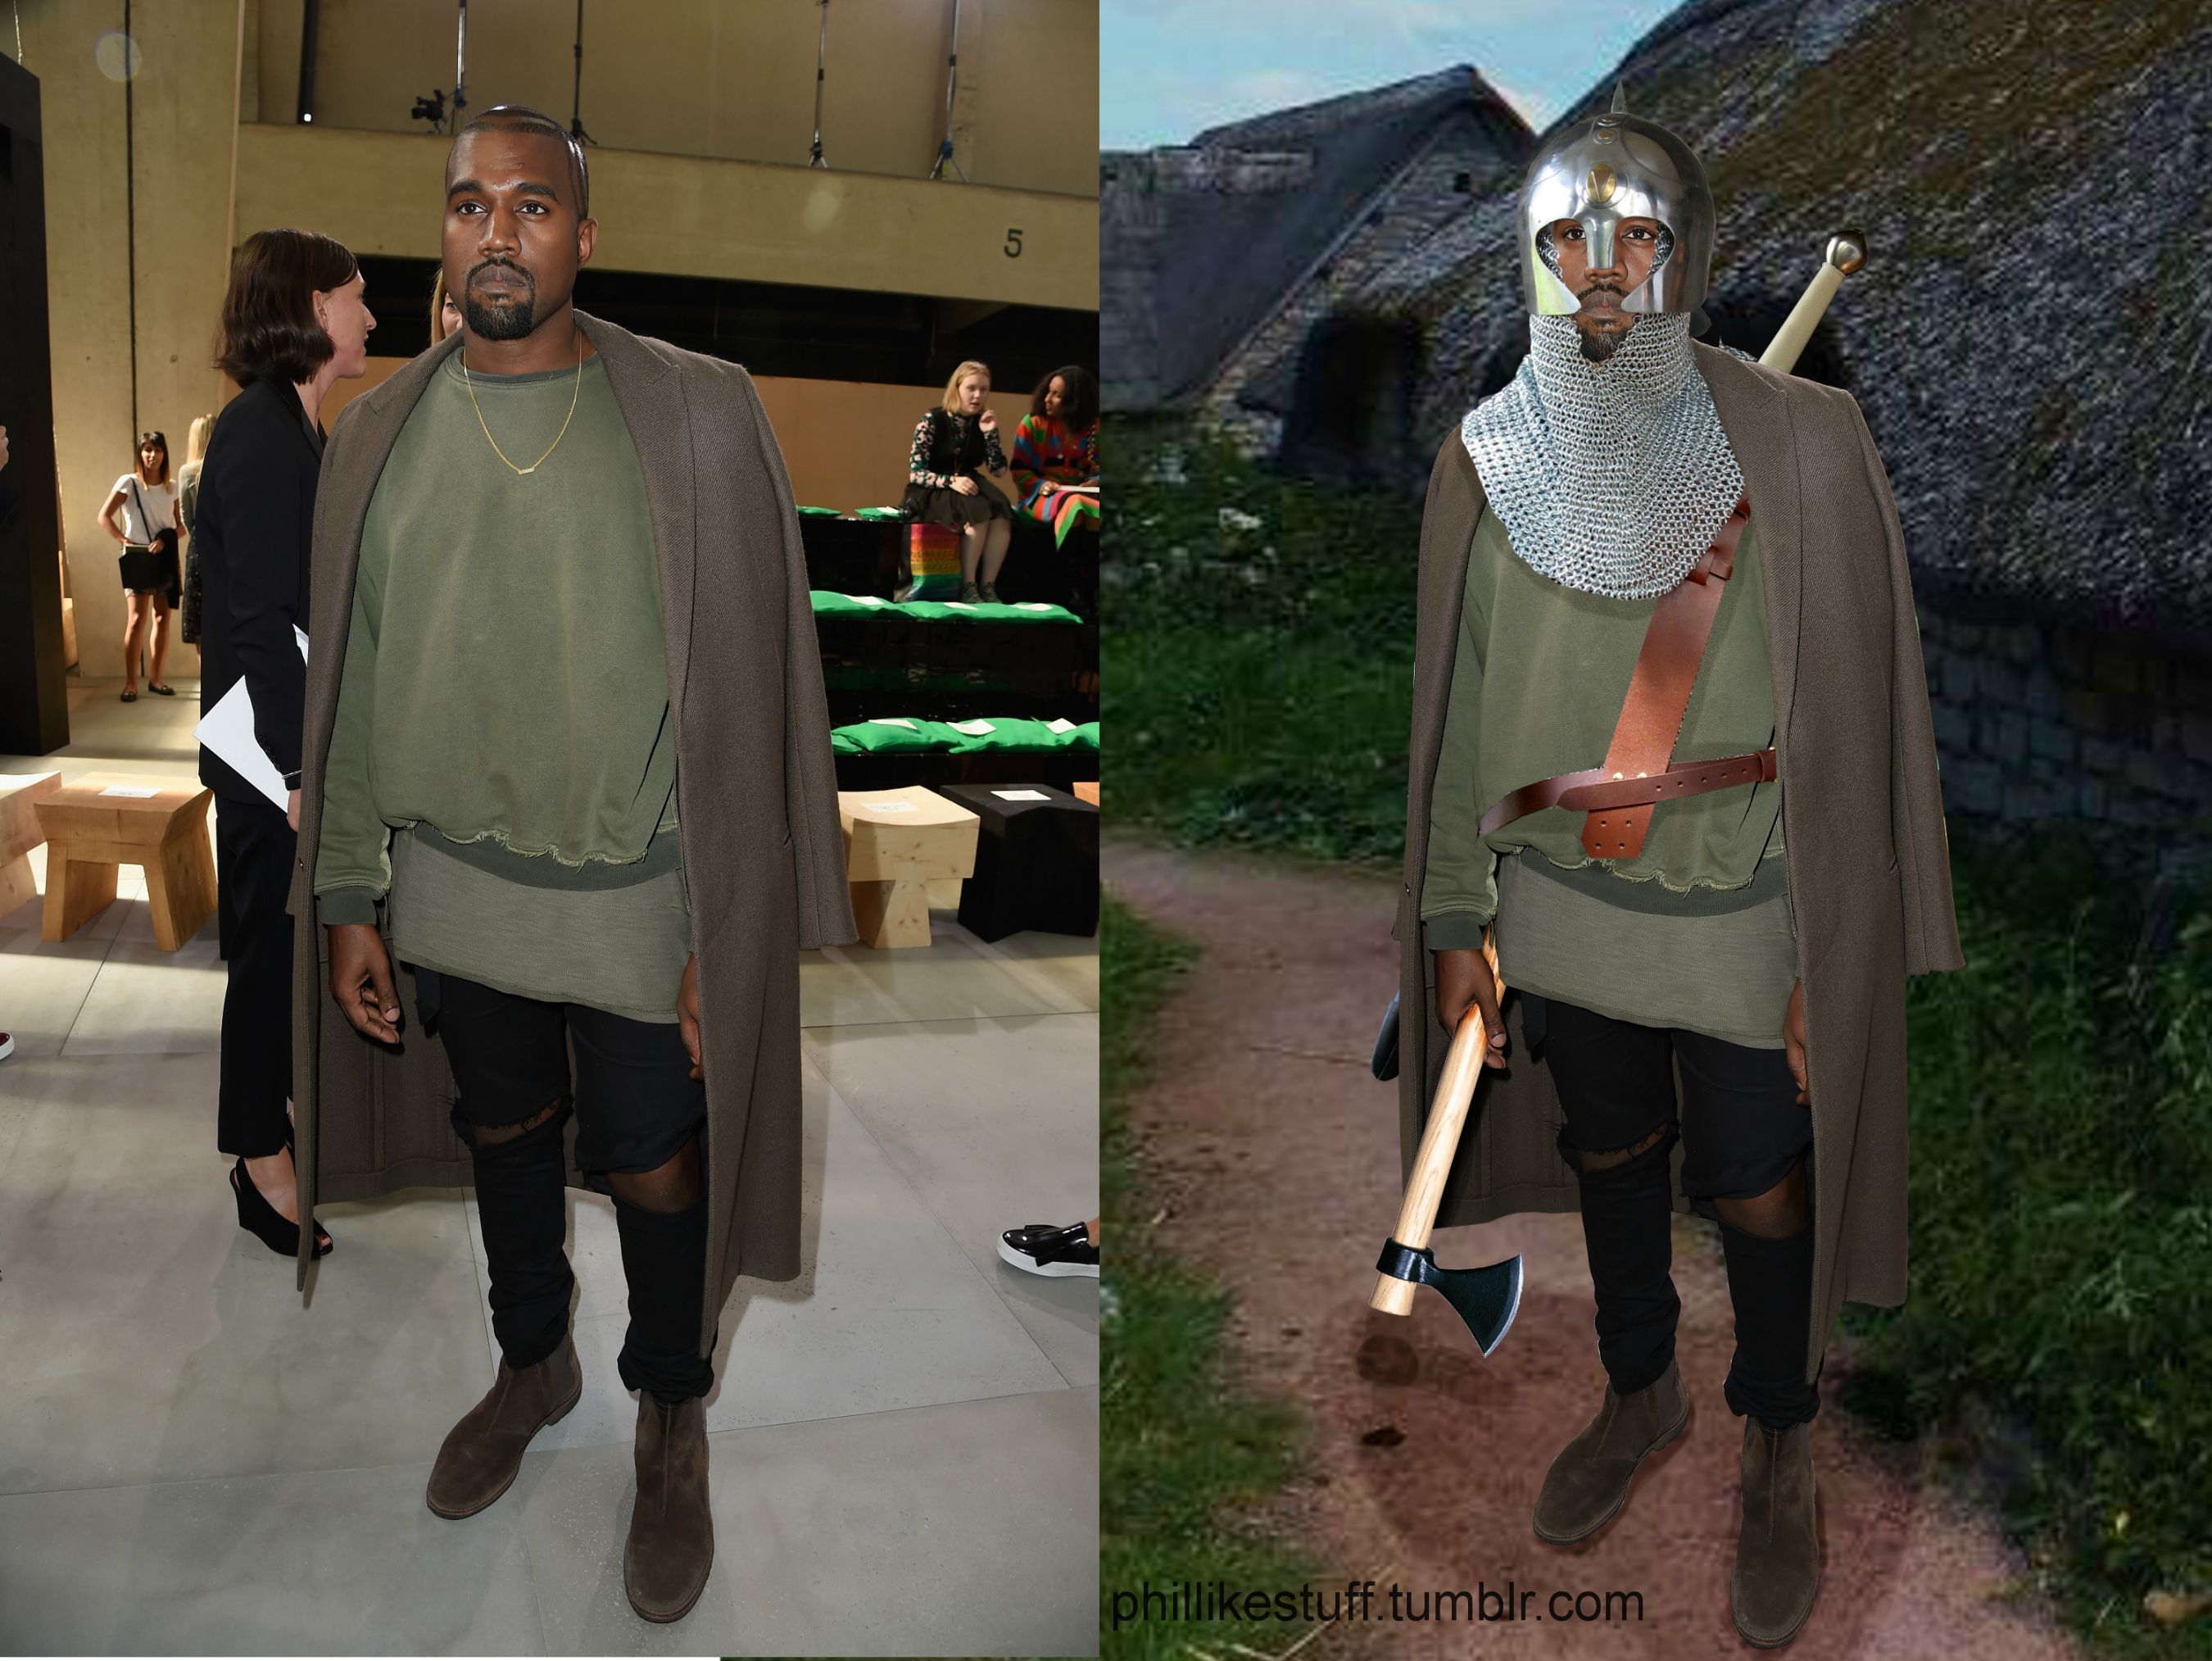 Kanye West, Level 1 RPG character